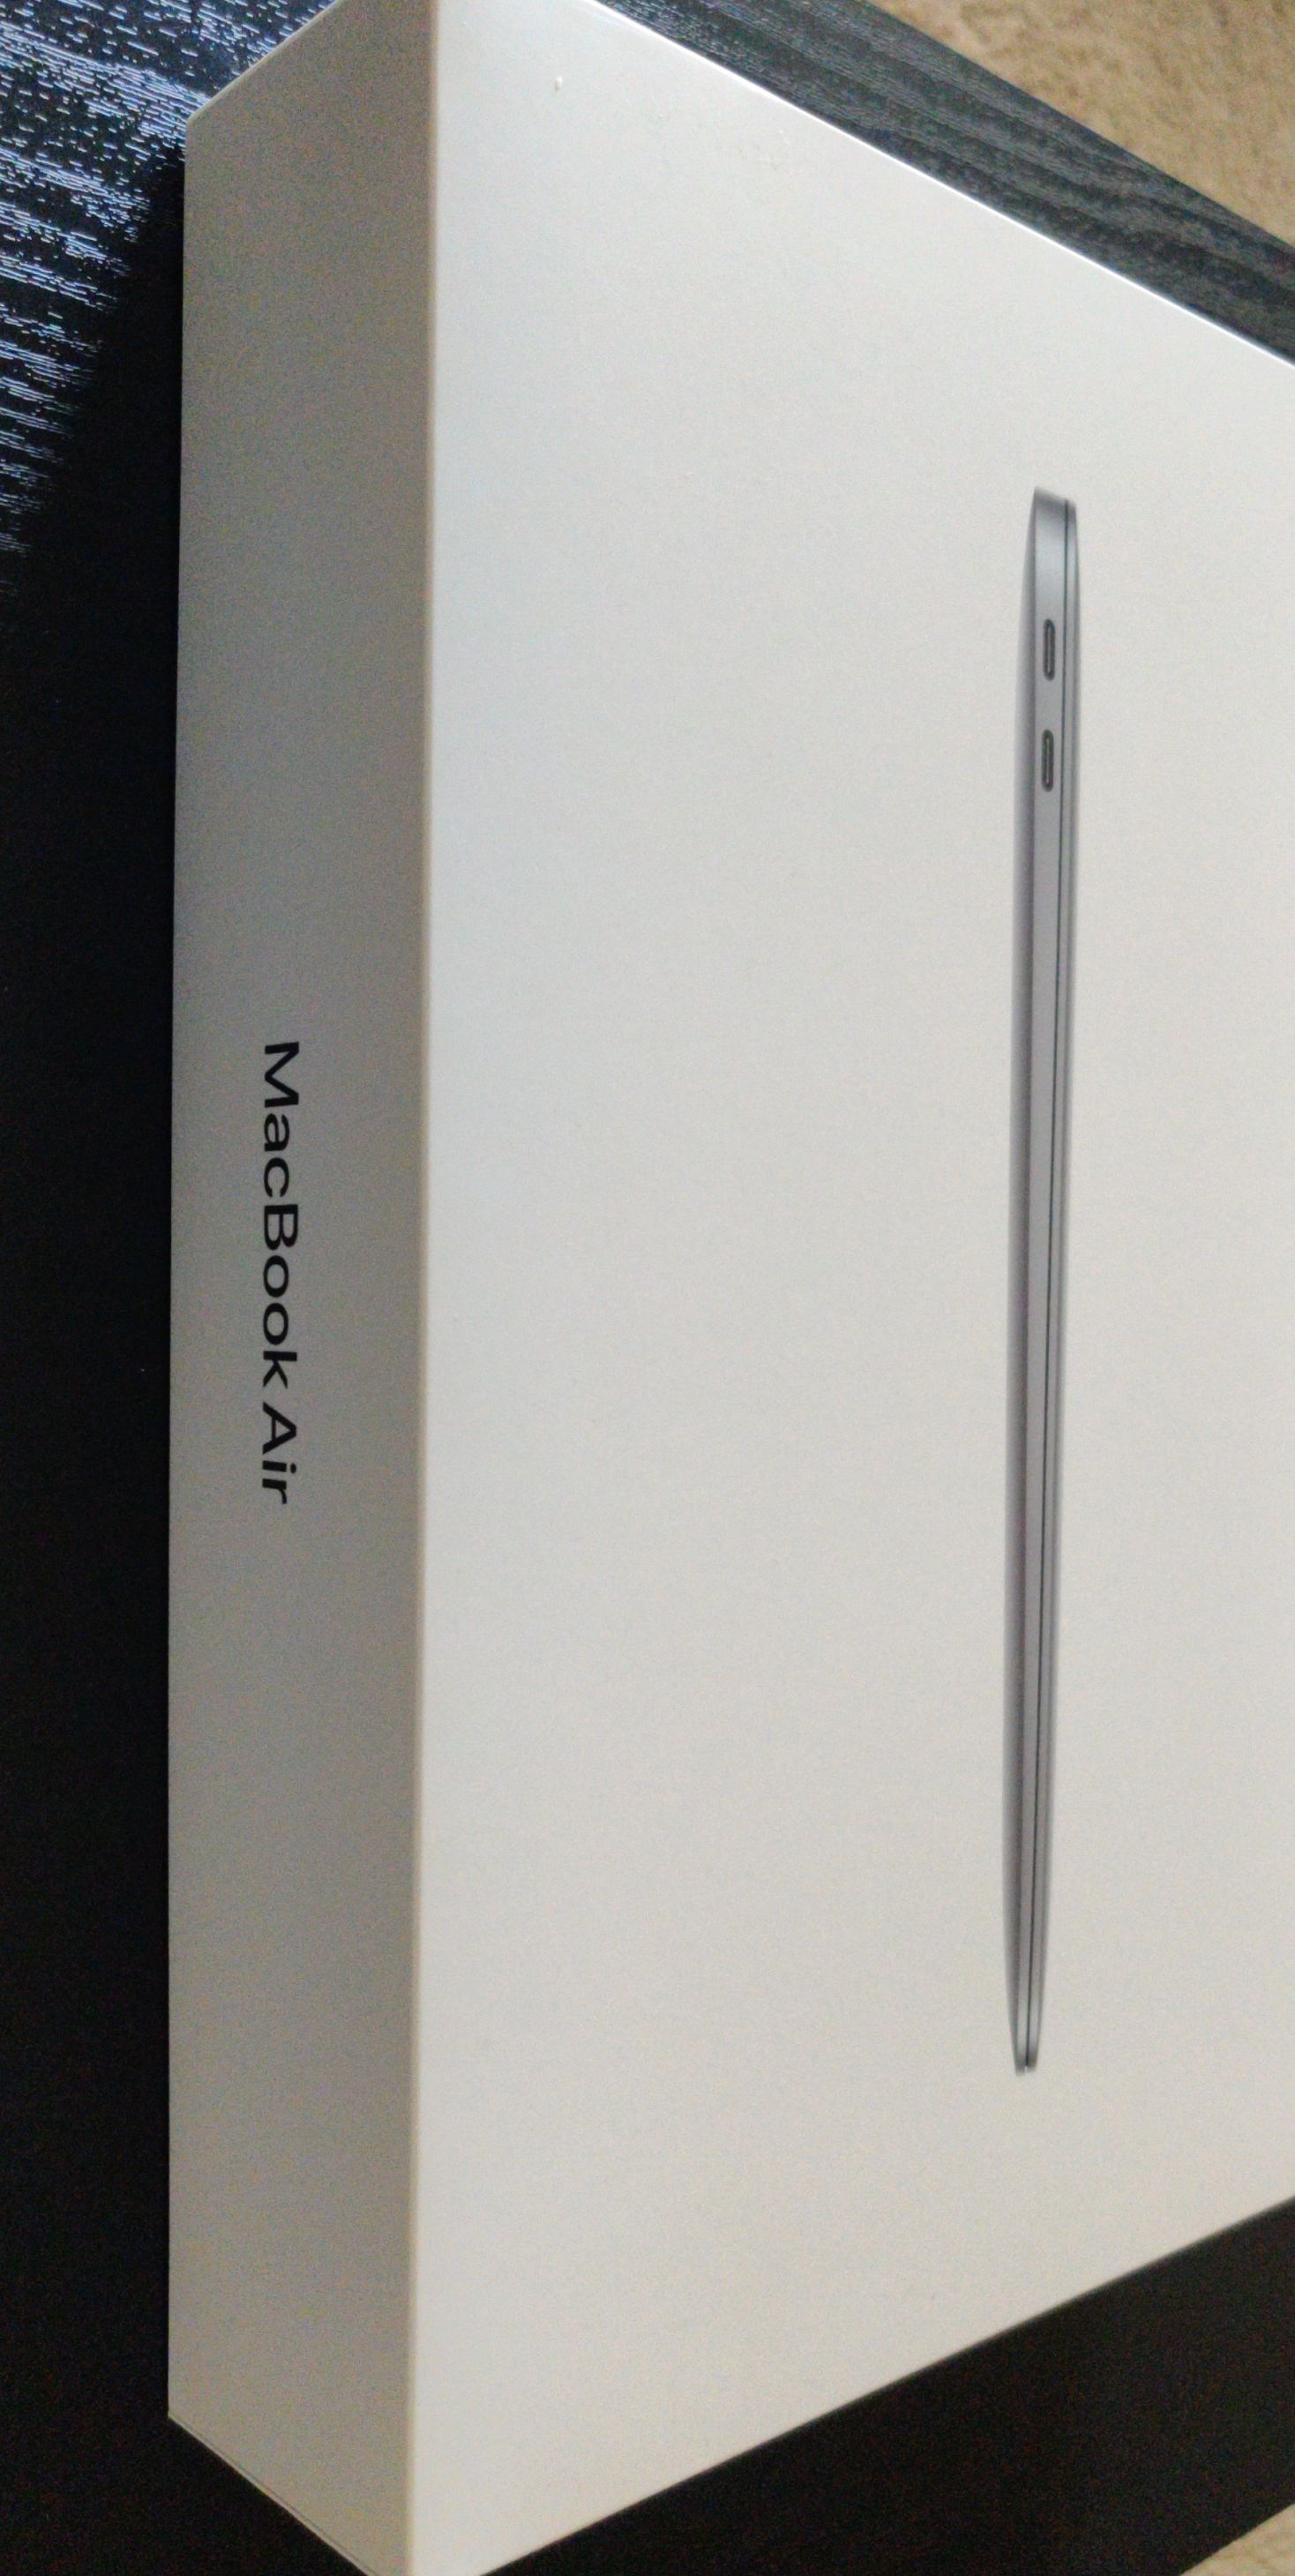 MacBook Air 13.3 2020 latest model